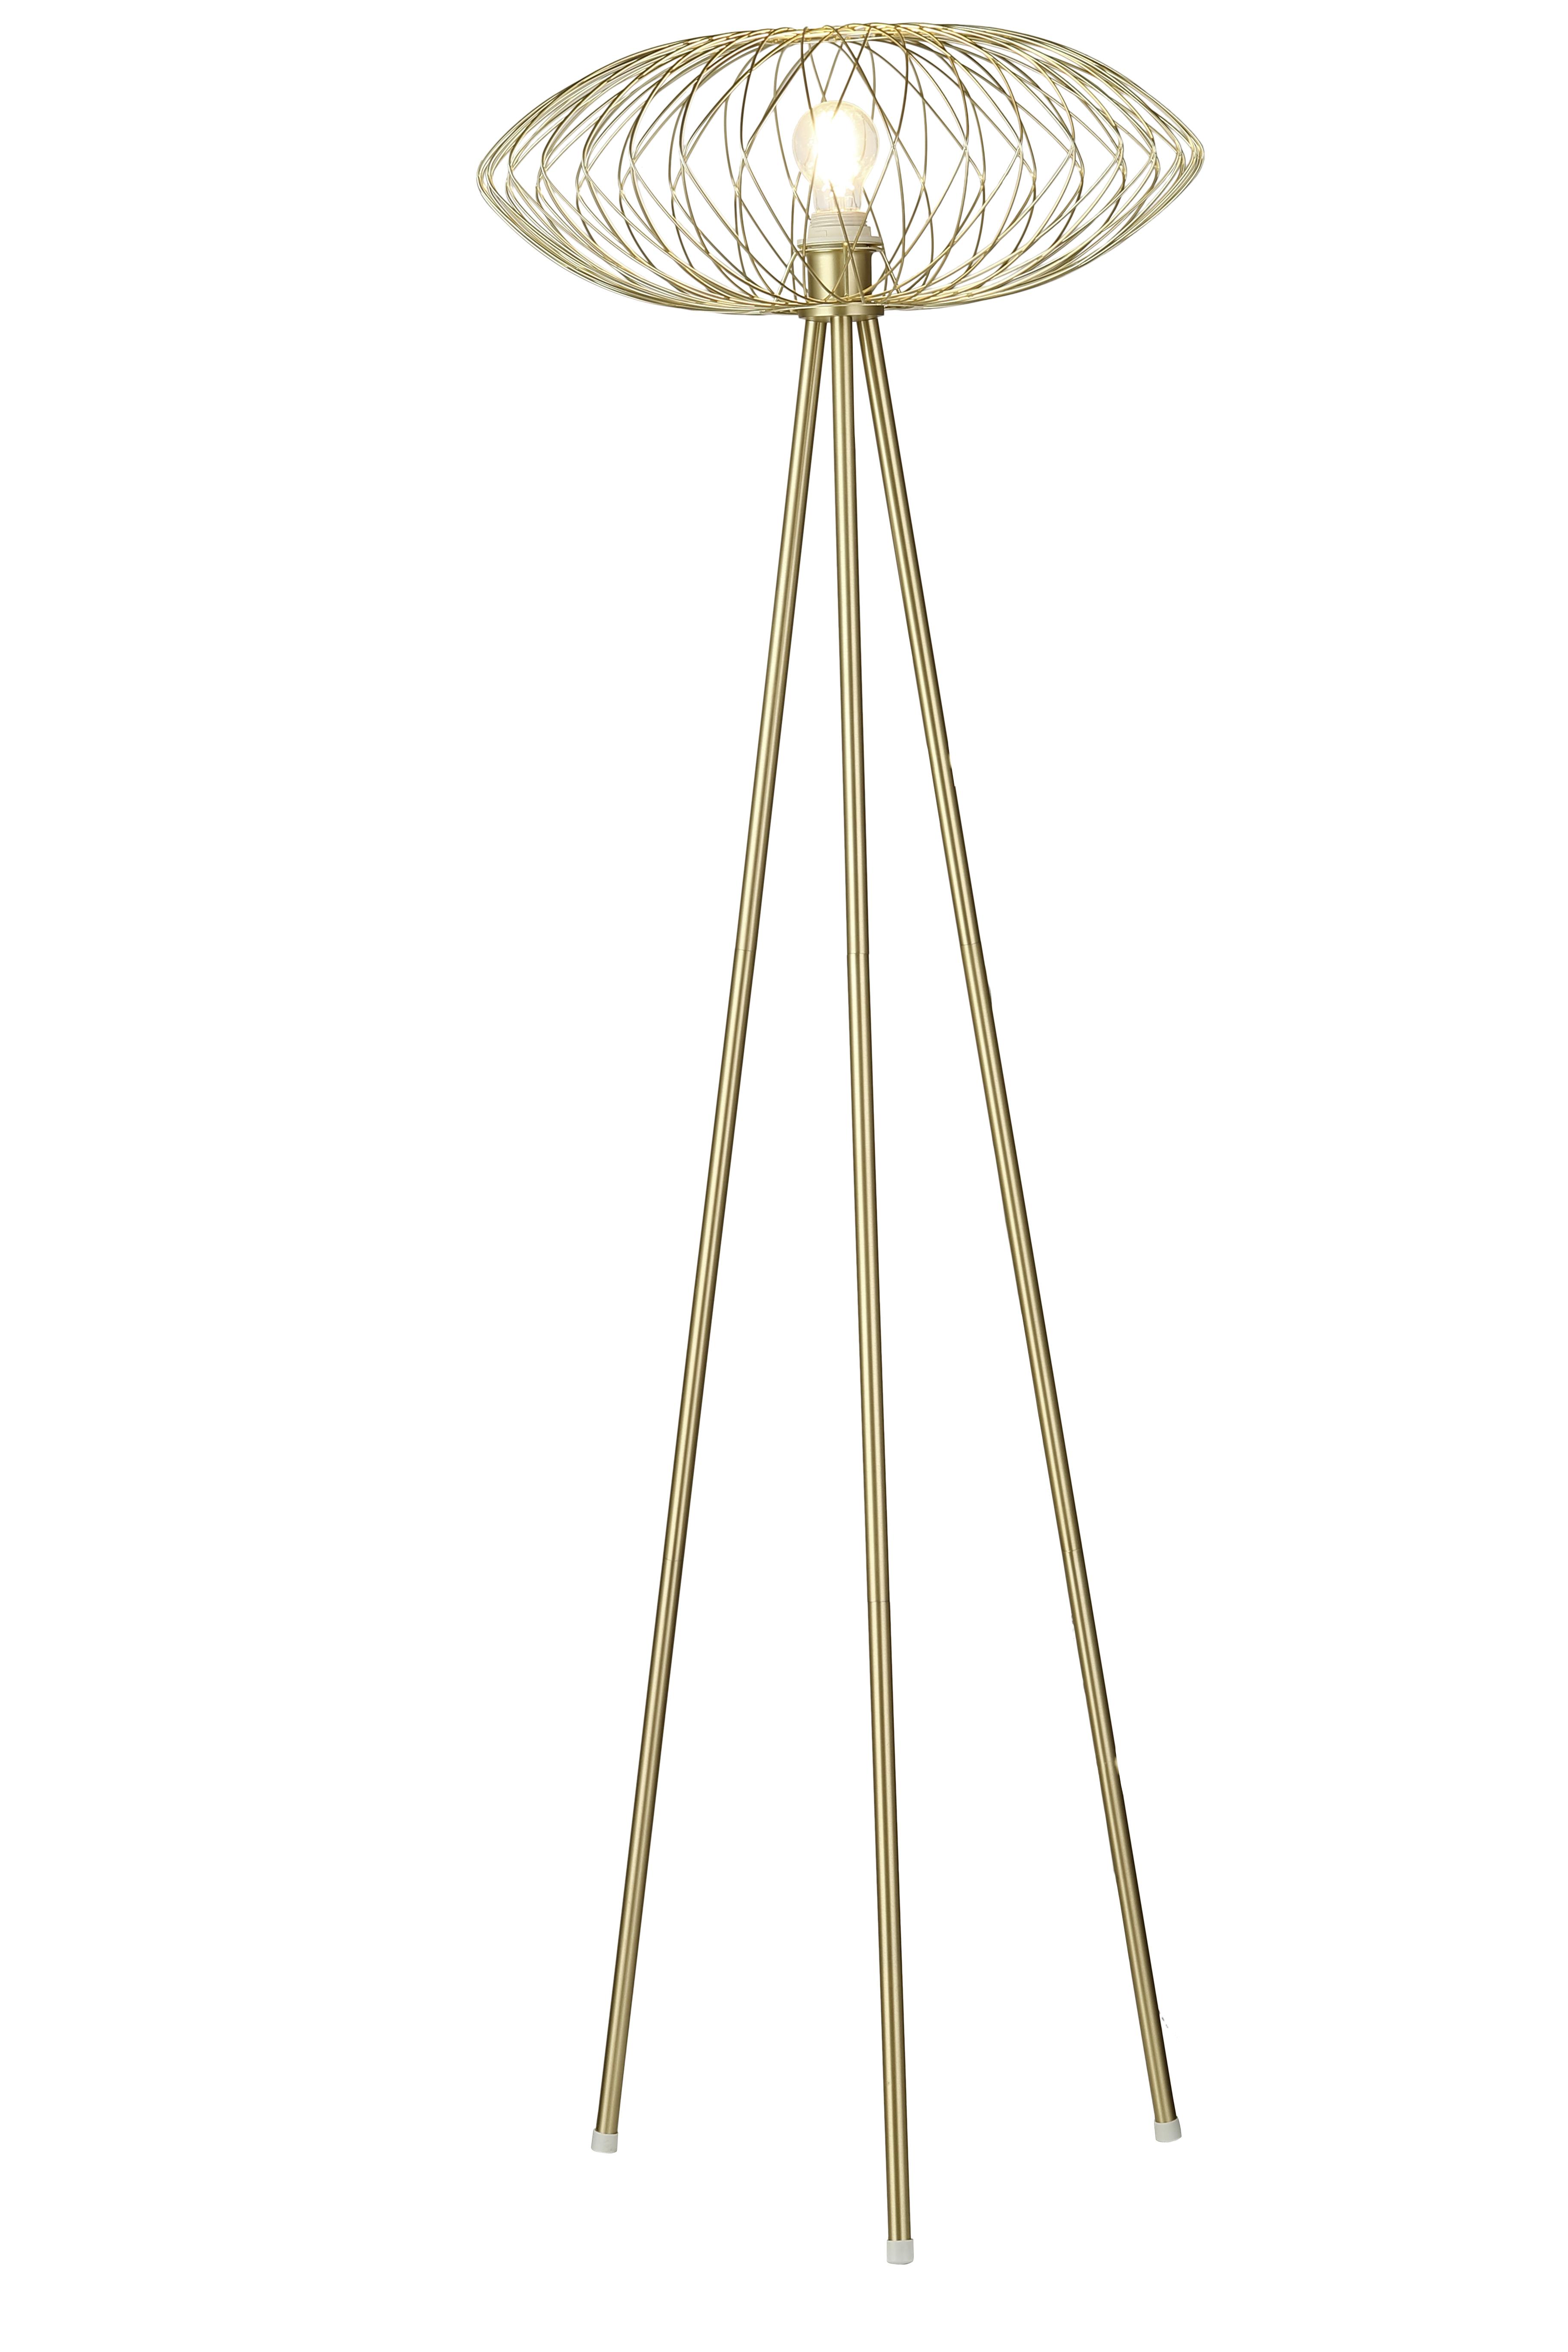 Stehleuchte Tiziana max. 40 Watt - Goldfarben, MODERN, Metall (50/150cm) - Bessagi Home